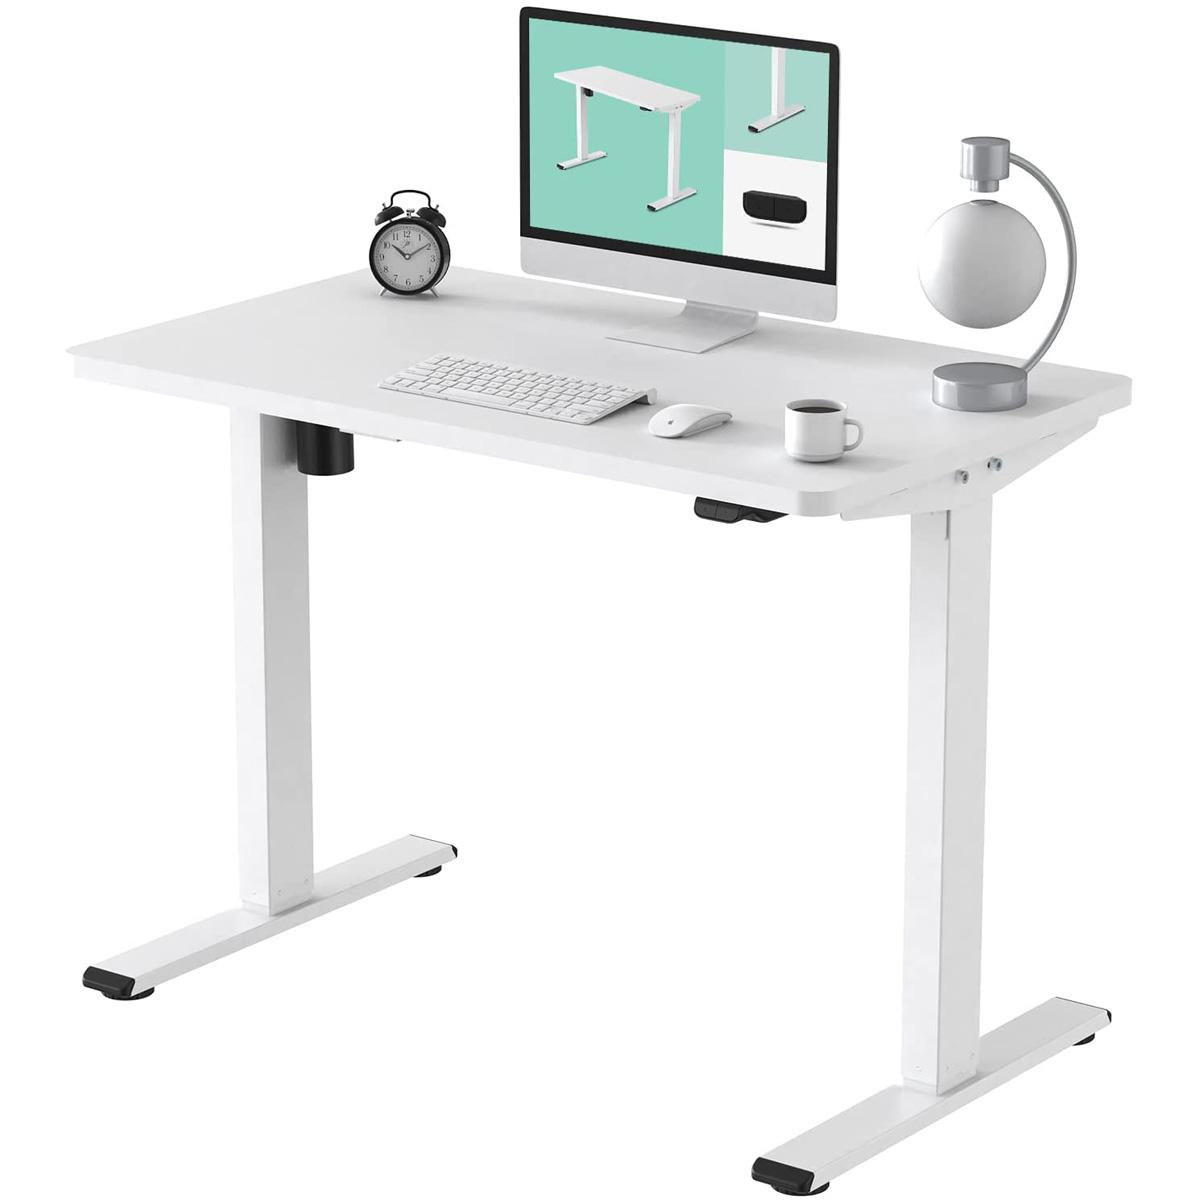 Flexisport EC1 Essential Adjustable Height Desk for $199.99 Shipped